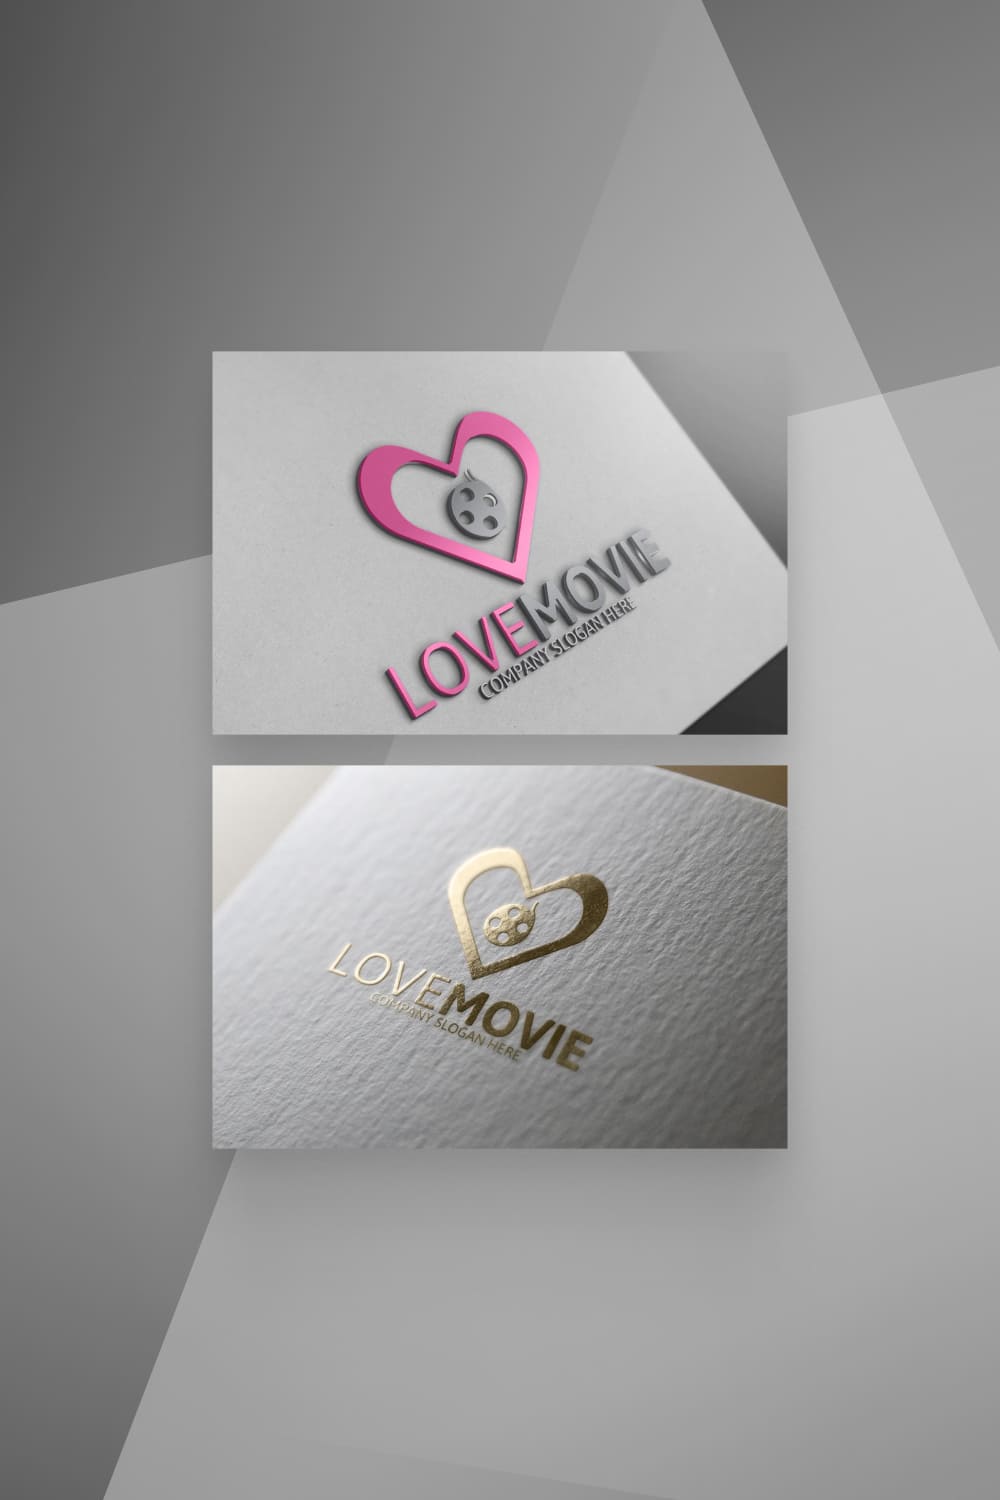 05 love movie logo1000x1500